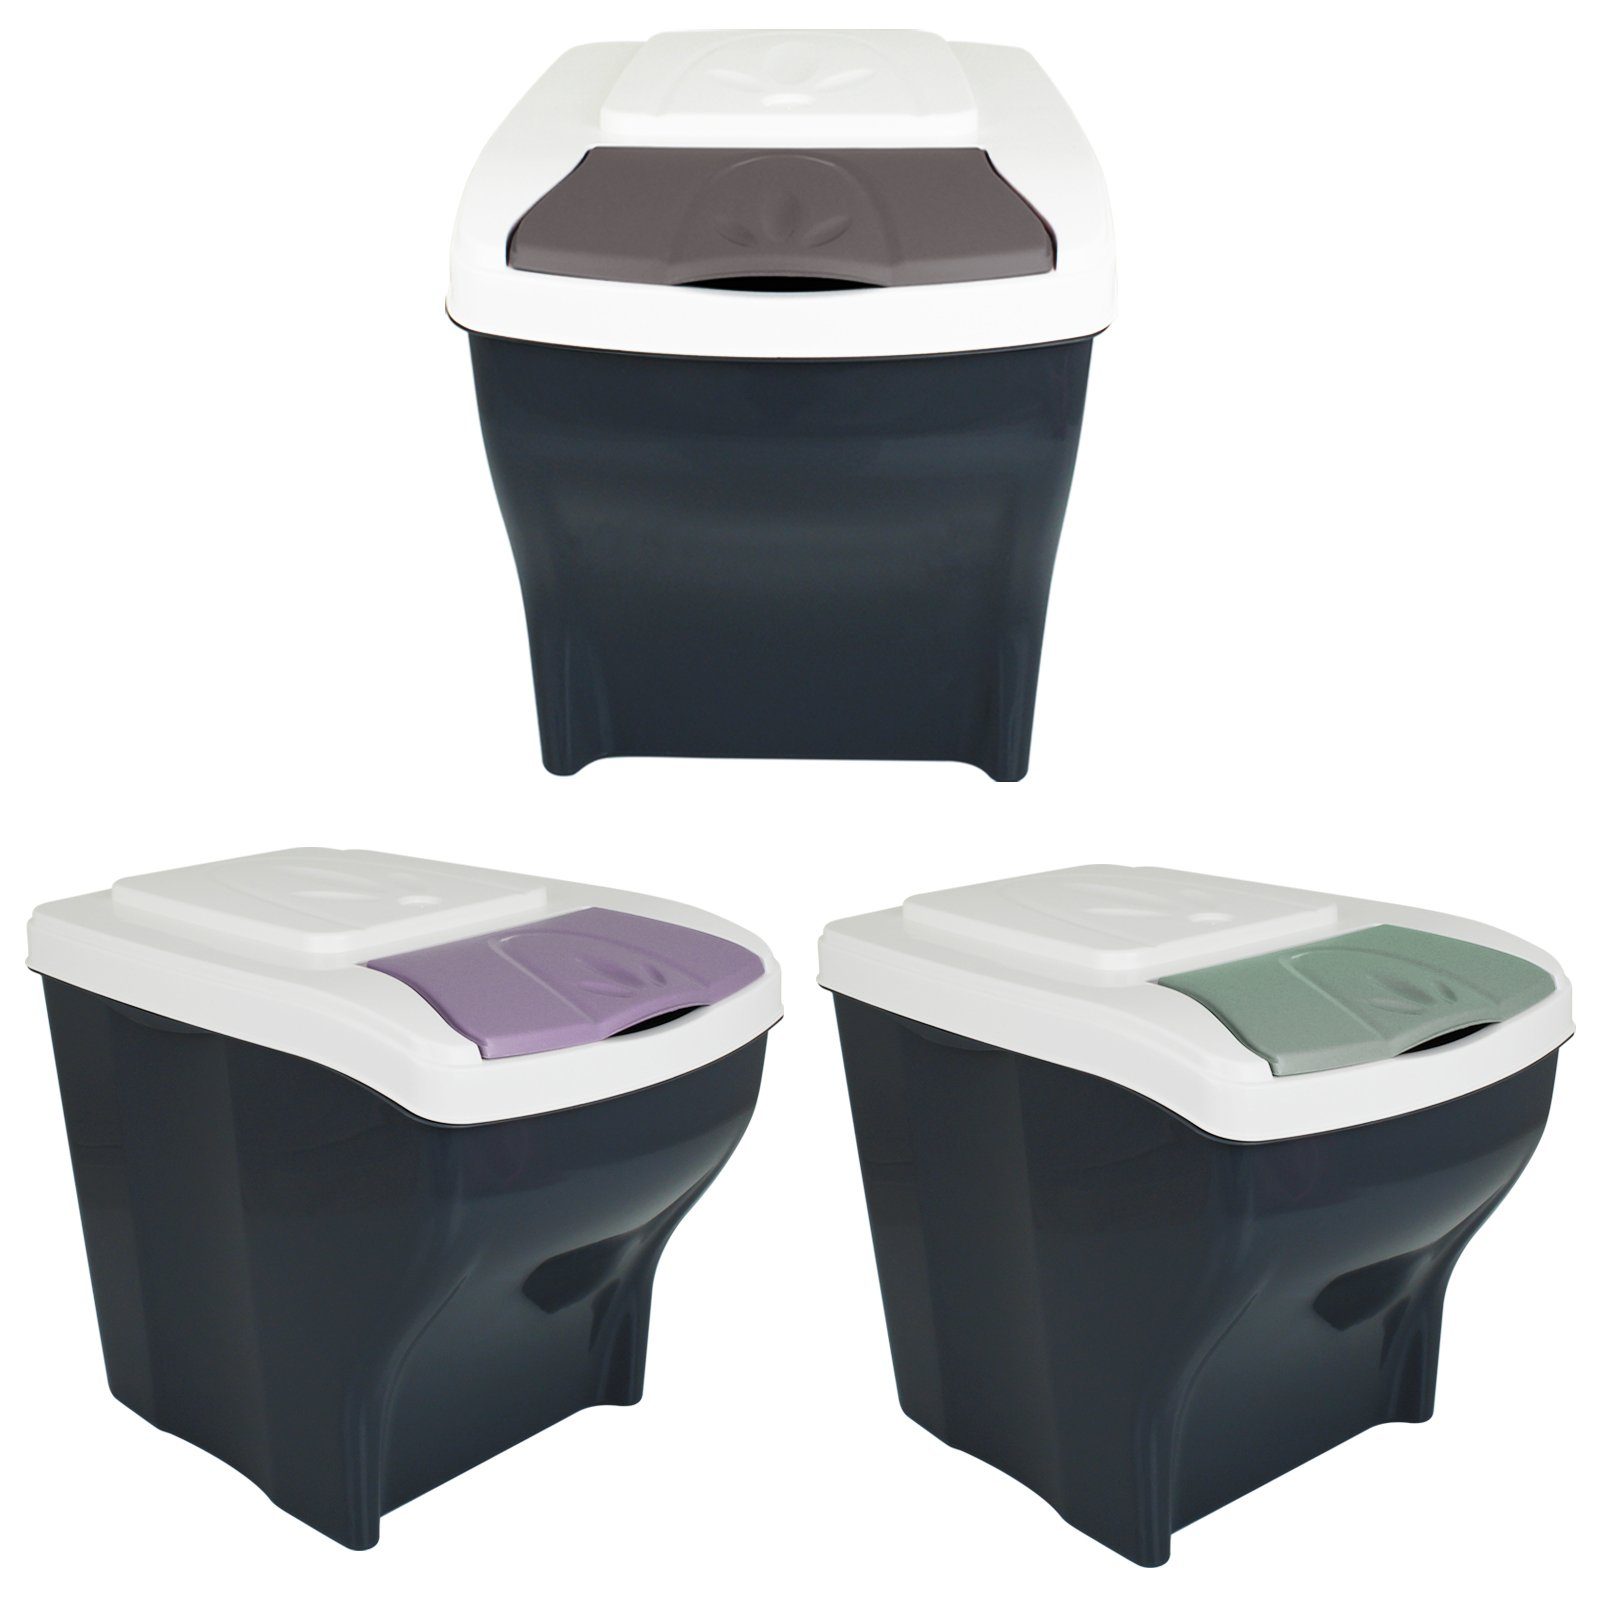 Bischof Mülltrennsystem Abfallsammler Set Poker Modellwahl Abfallbehälter Mülleimer Abfall, Müll Behälter Abfalleimer Abfalltrennsystem Müllsortierer